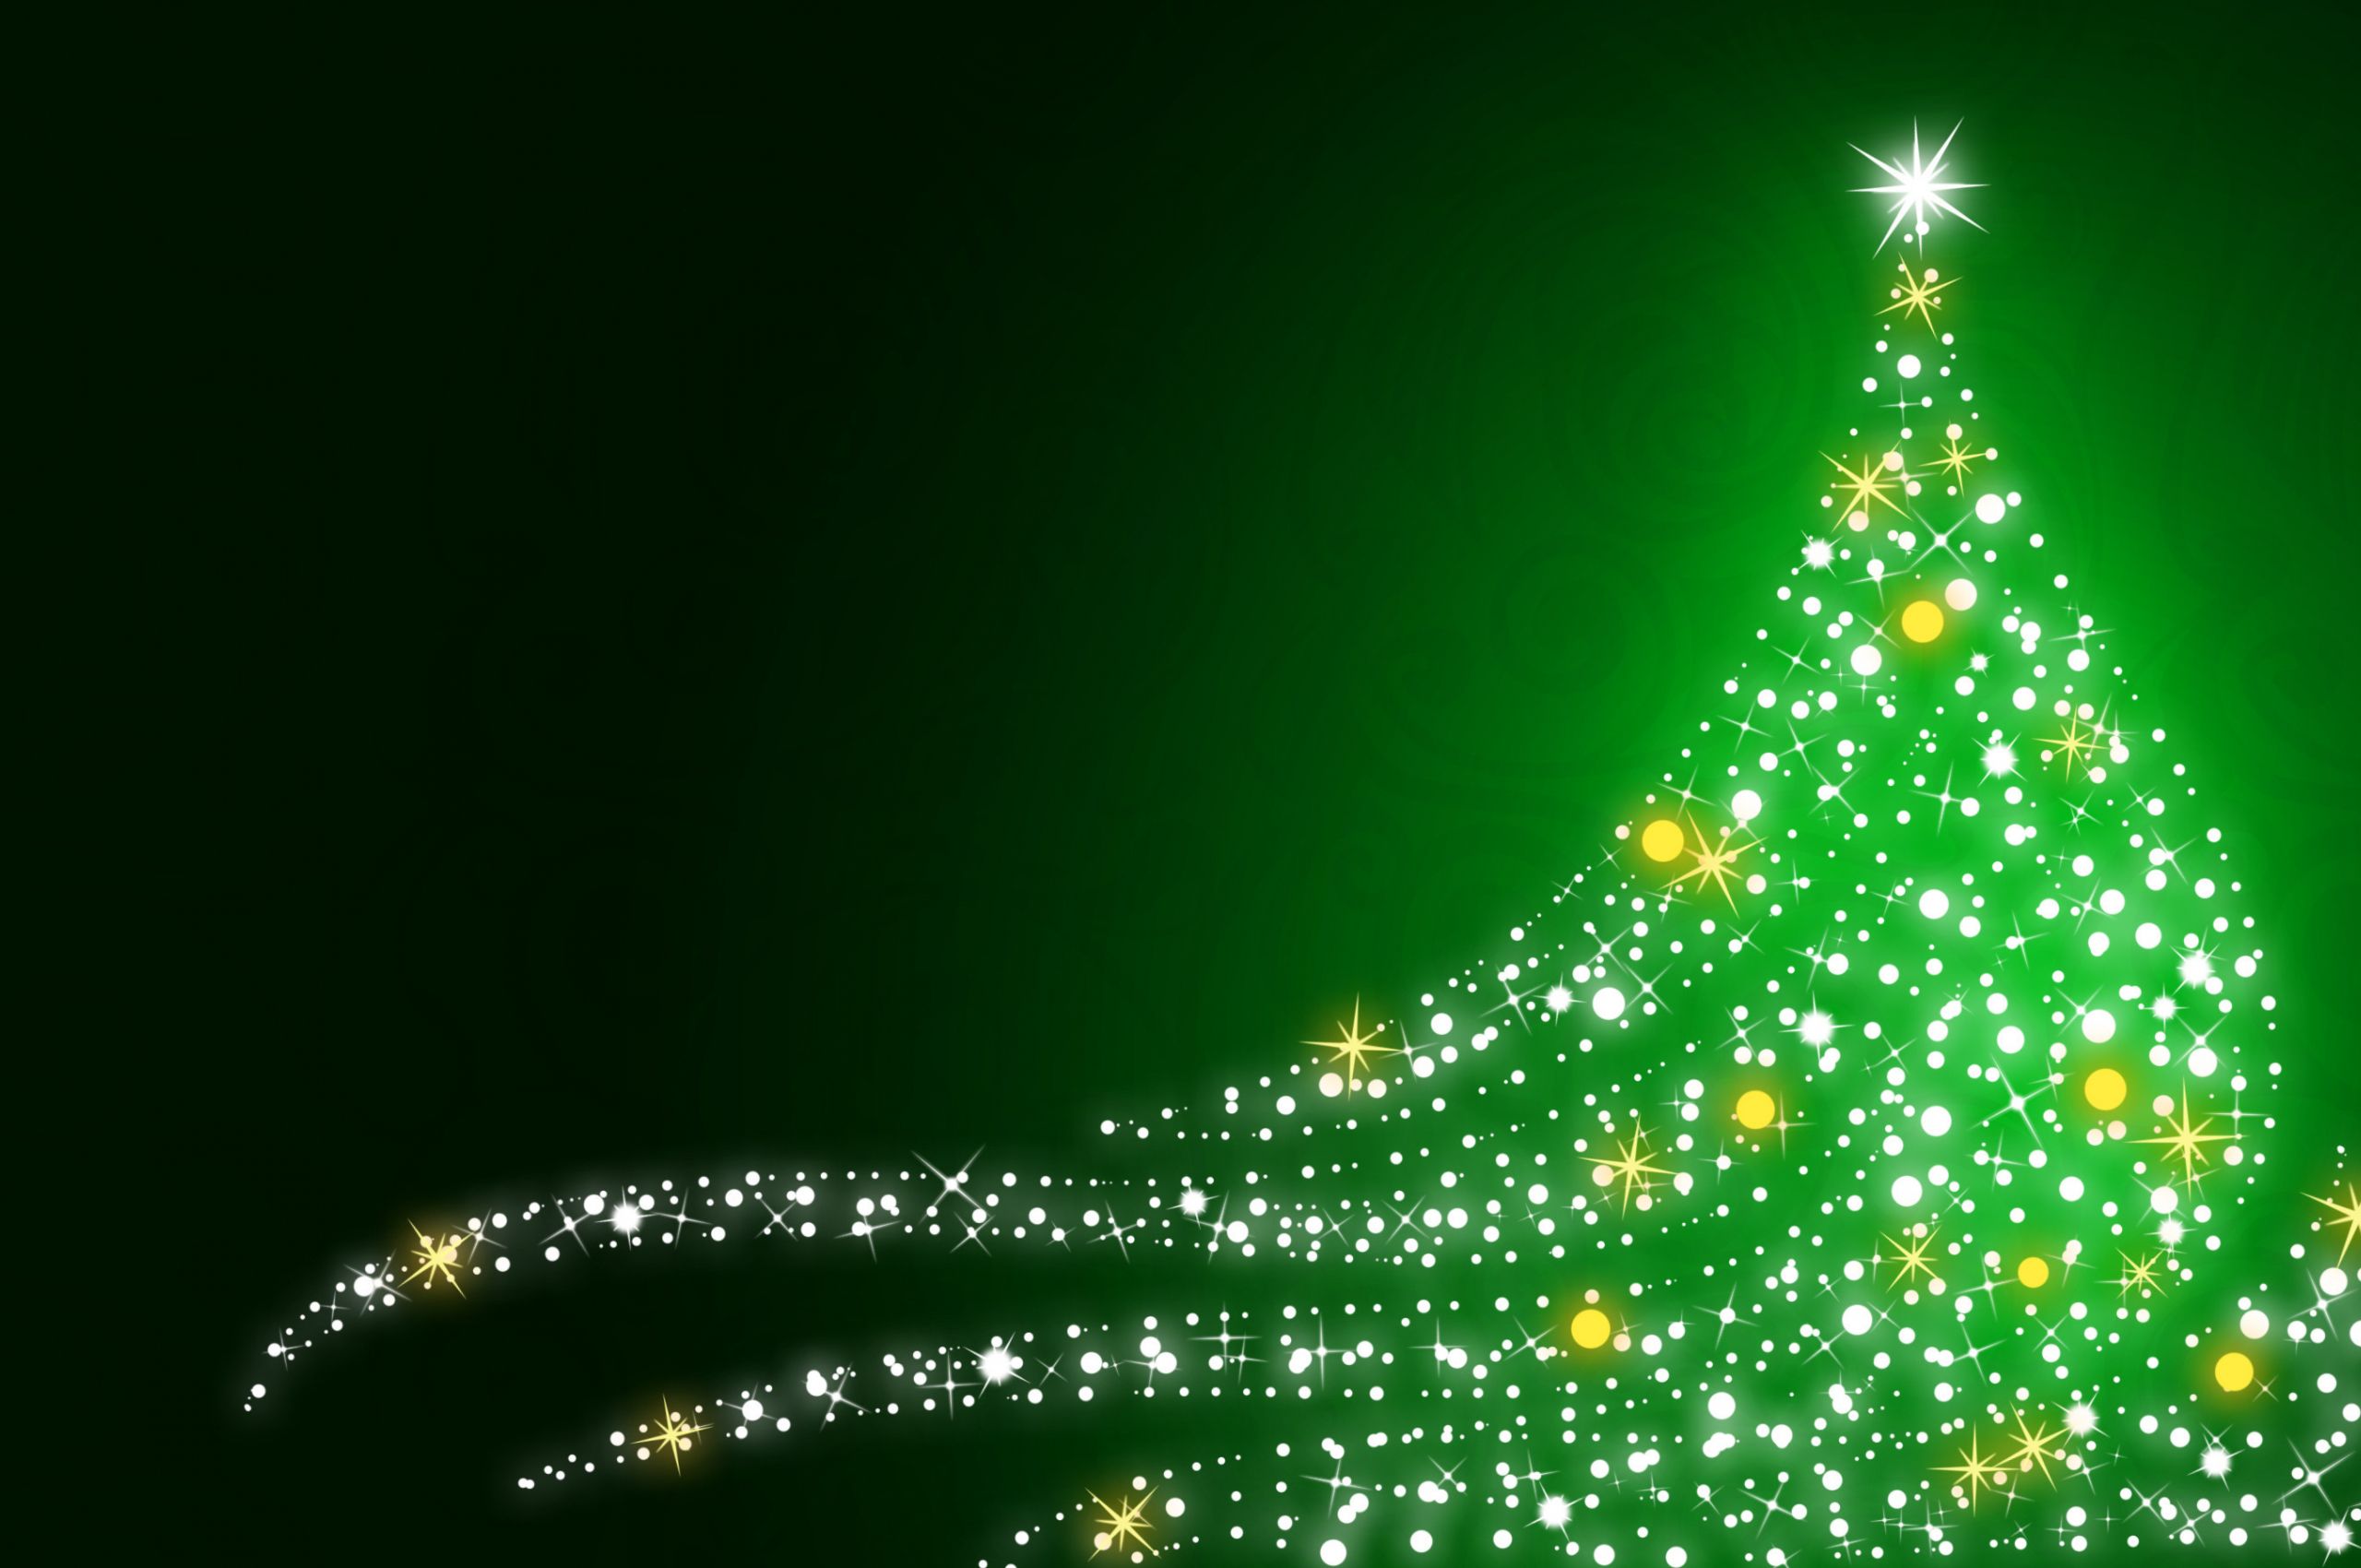 532613 Green Christmas Wallpaper Images Stock Photos  Vectors   Shutterstock